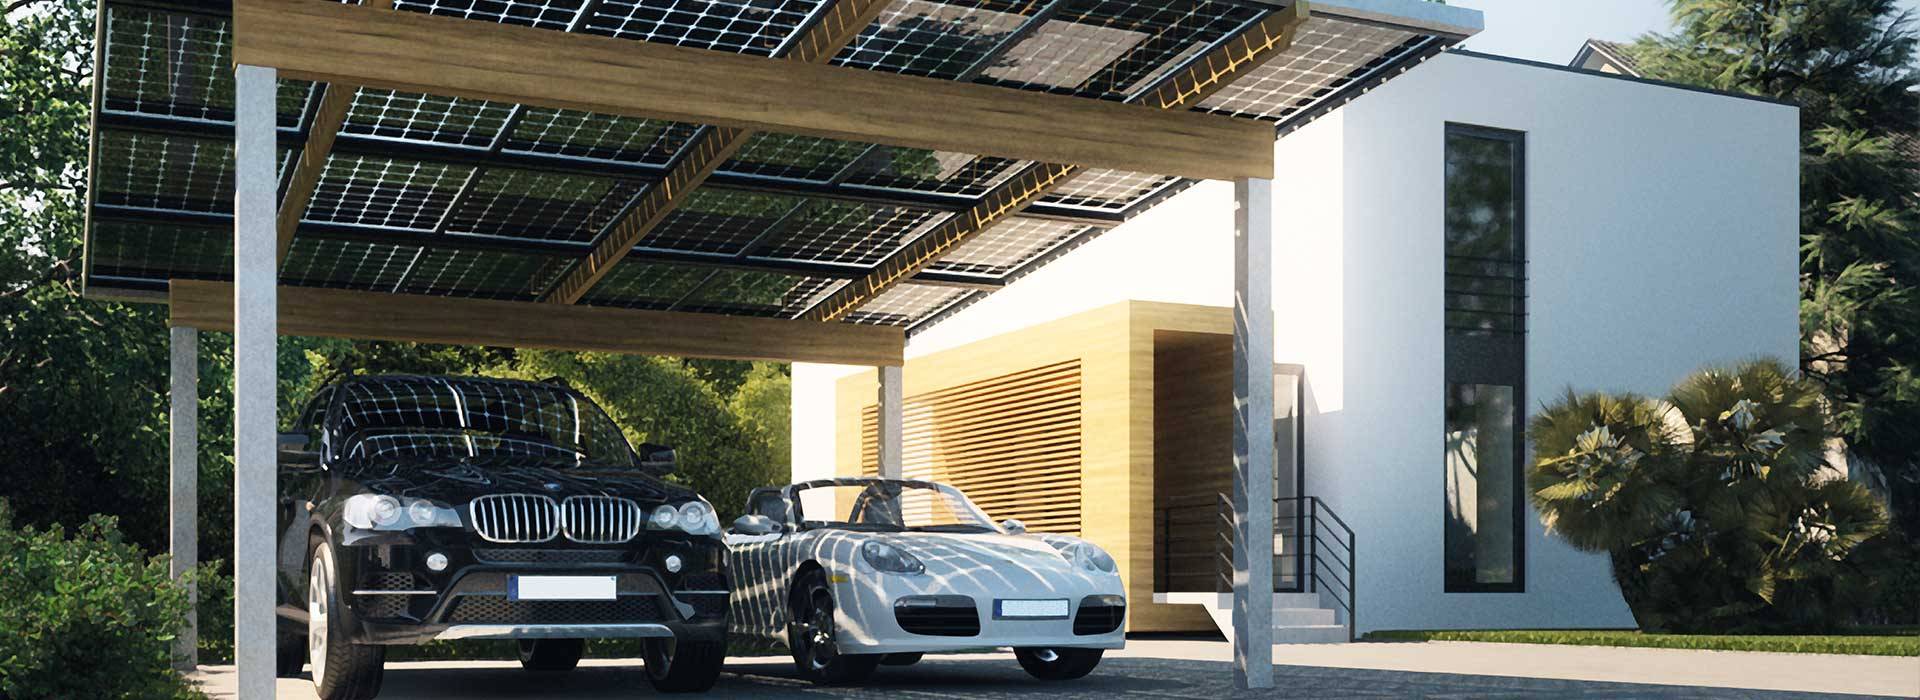 Helbig Energie | Solar-Carport